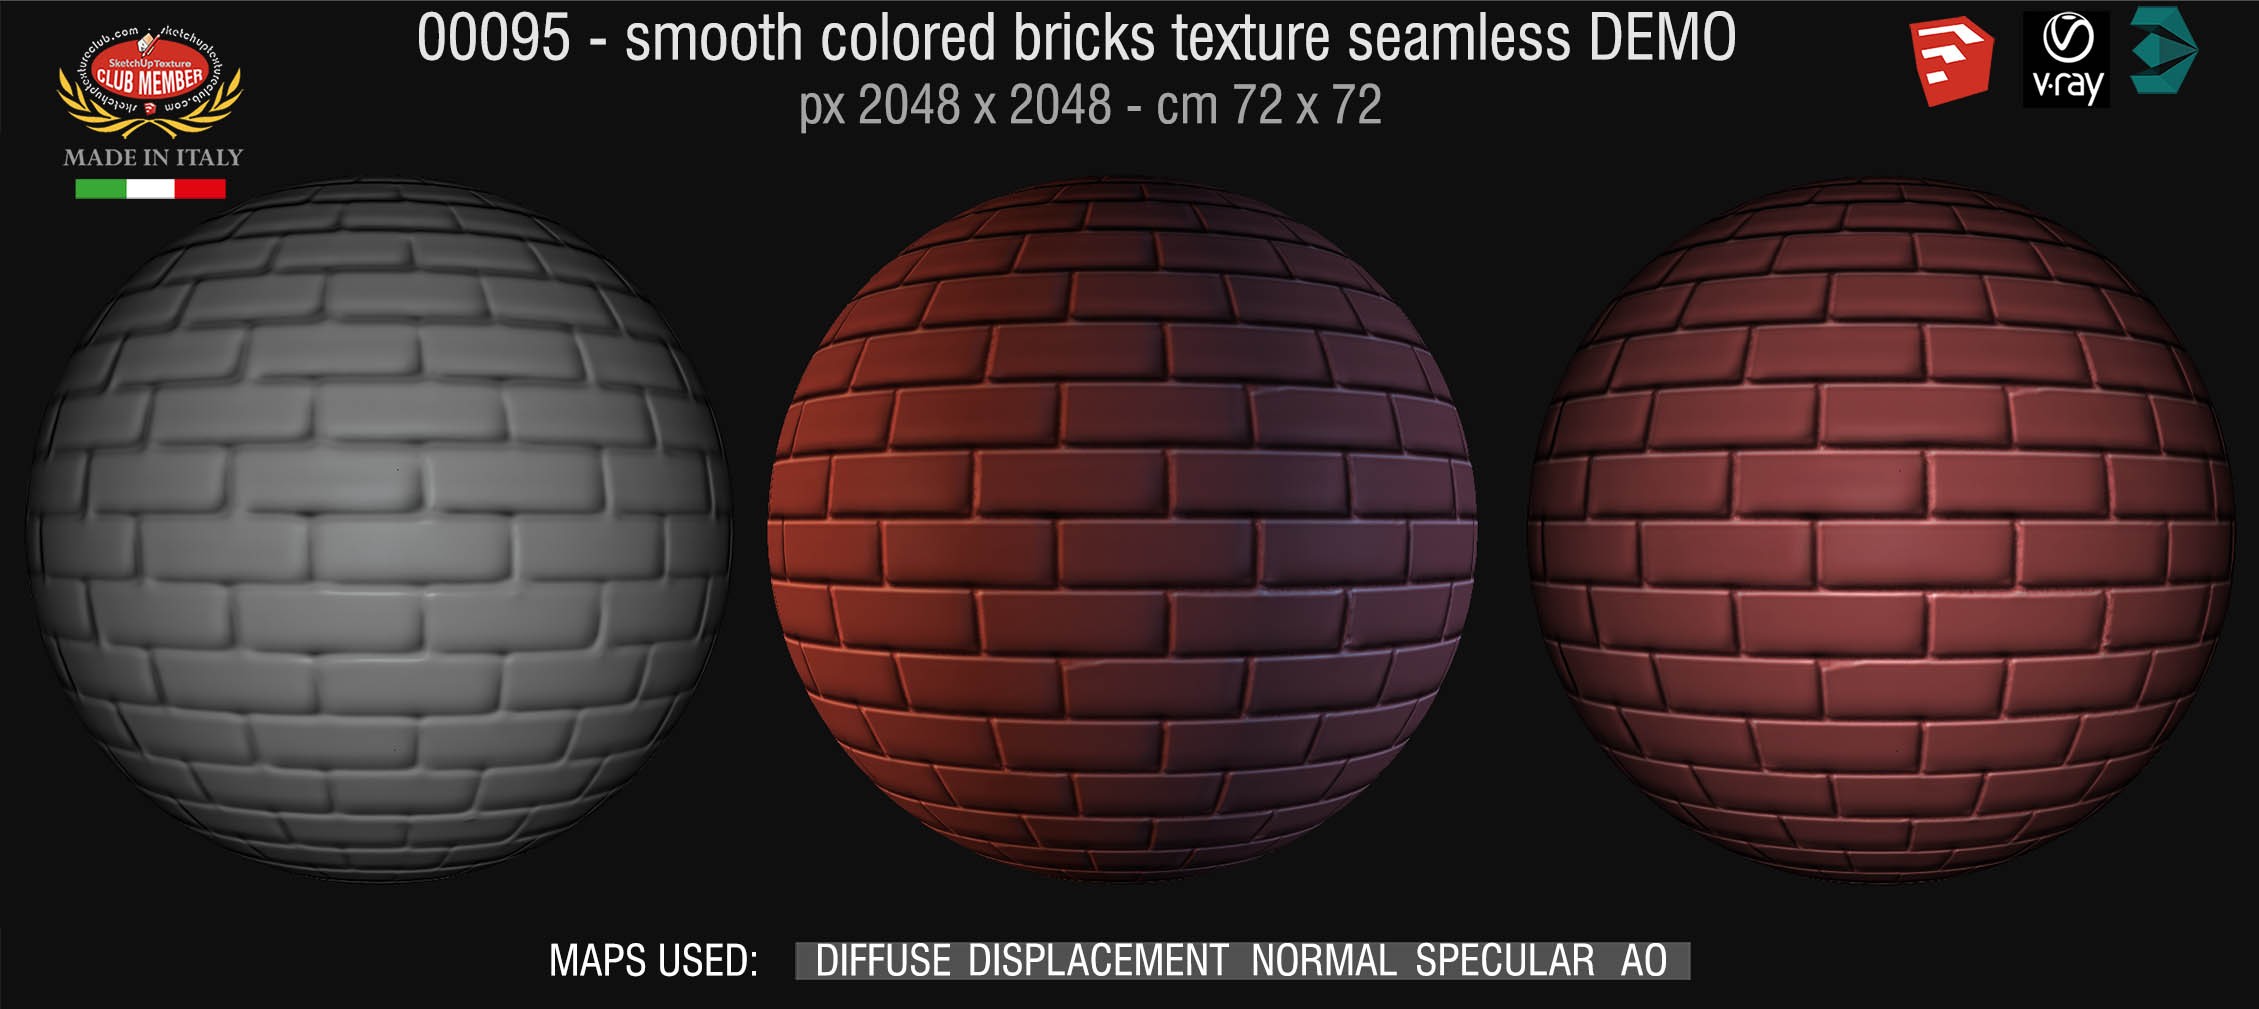 00095 smooth colored bricks texture seamless + maps DEMO